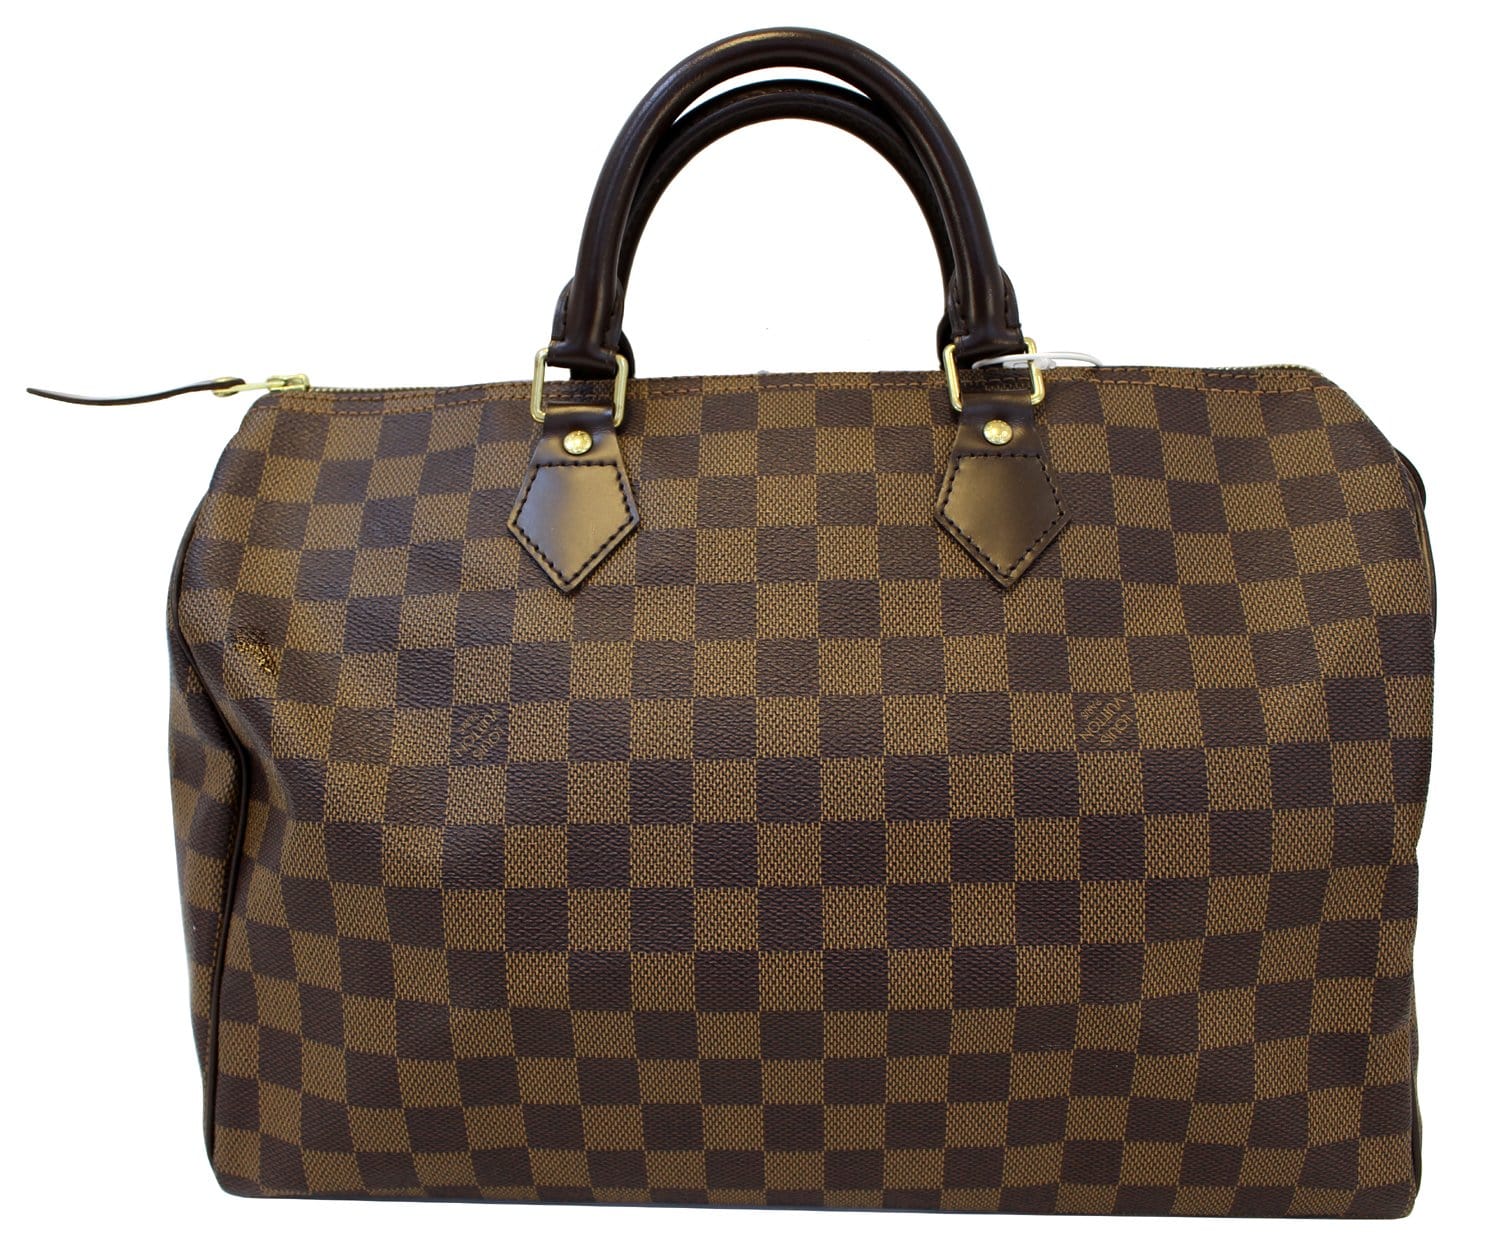 Louis Vuitton #43214 Damier Ebene Speedy 35 Handbag